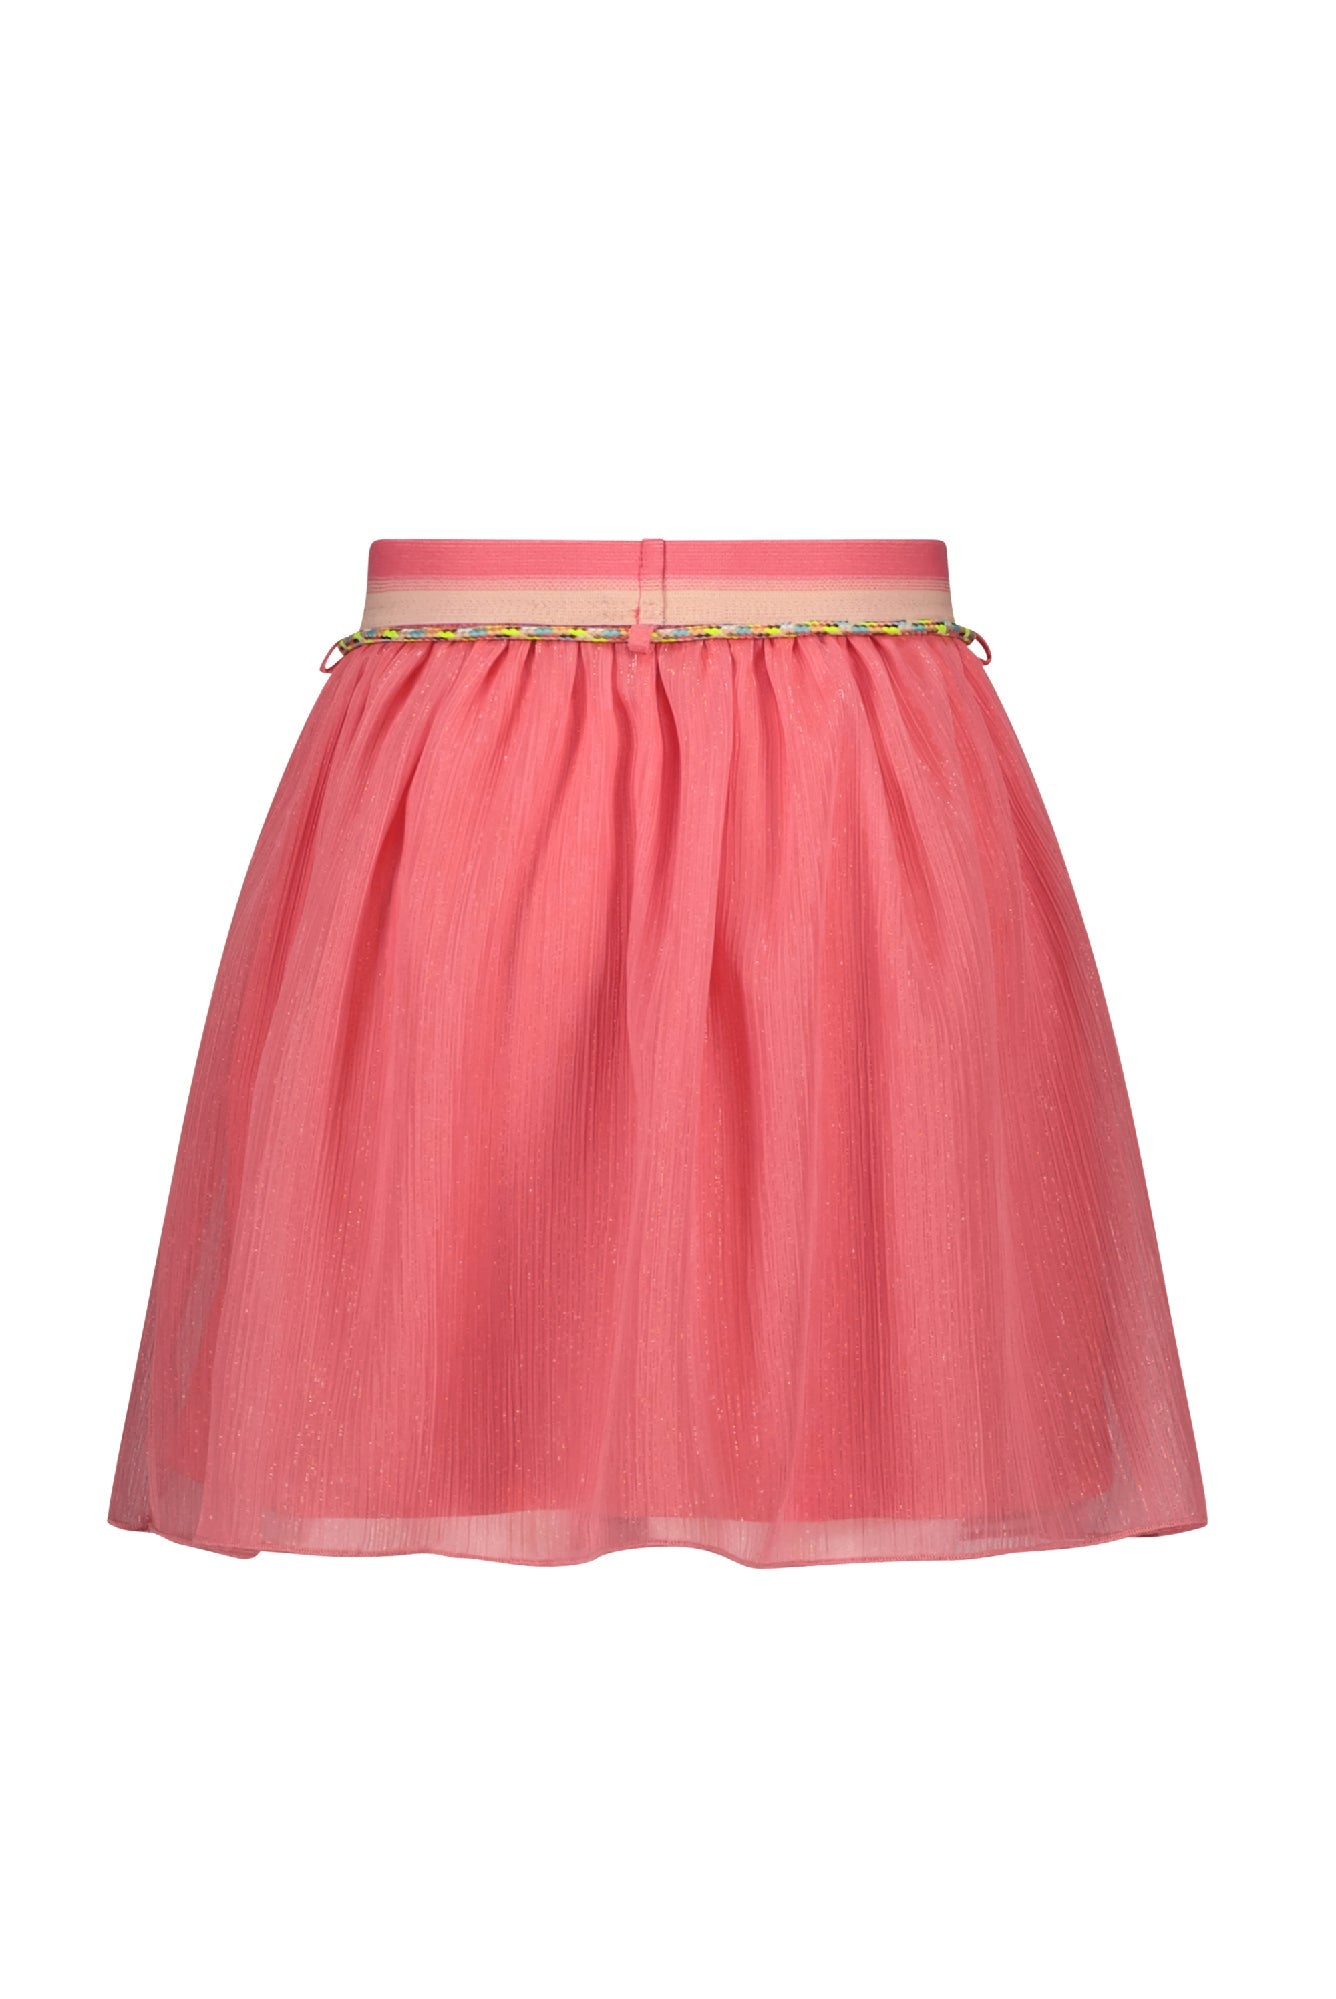 Meisjes Noba solid skirt with colored cord van NoNo in de kleur Peach Blossom in maat 134-140.